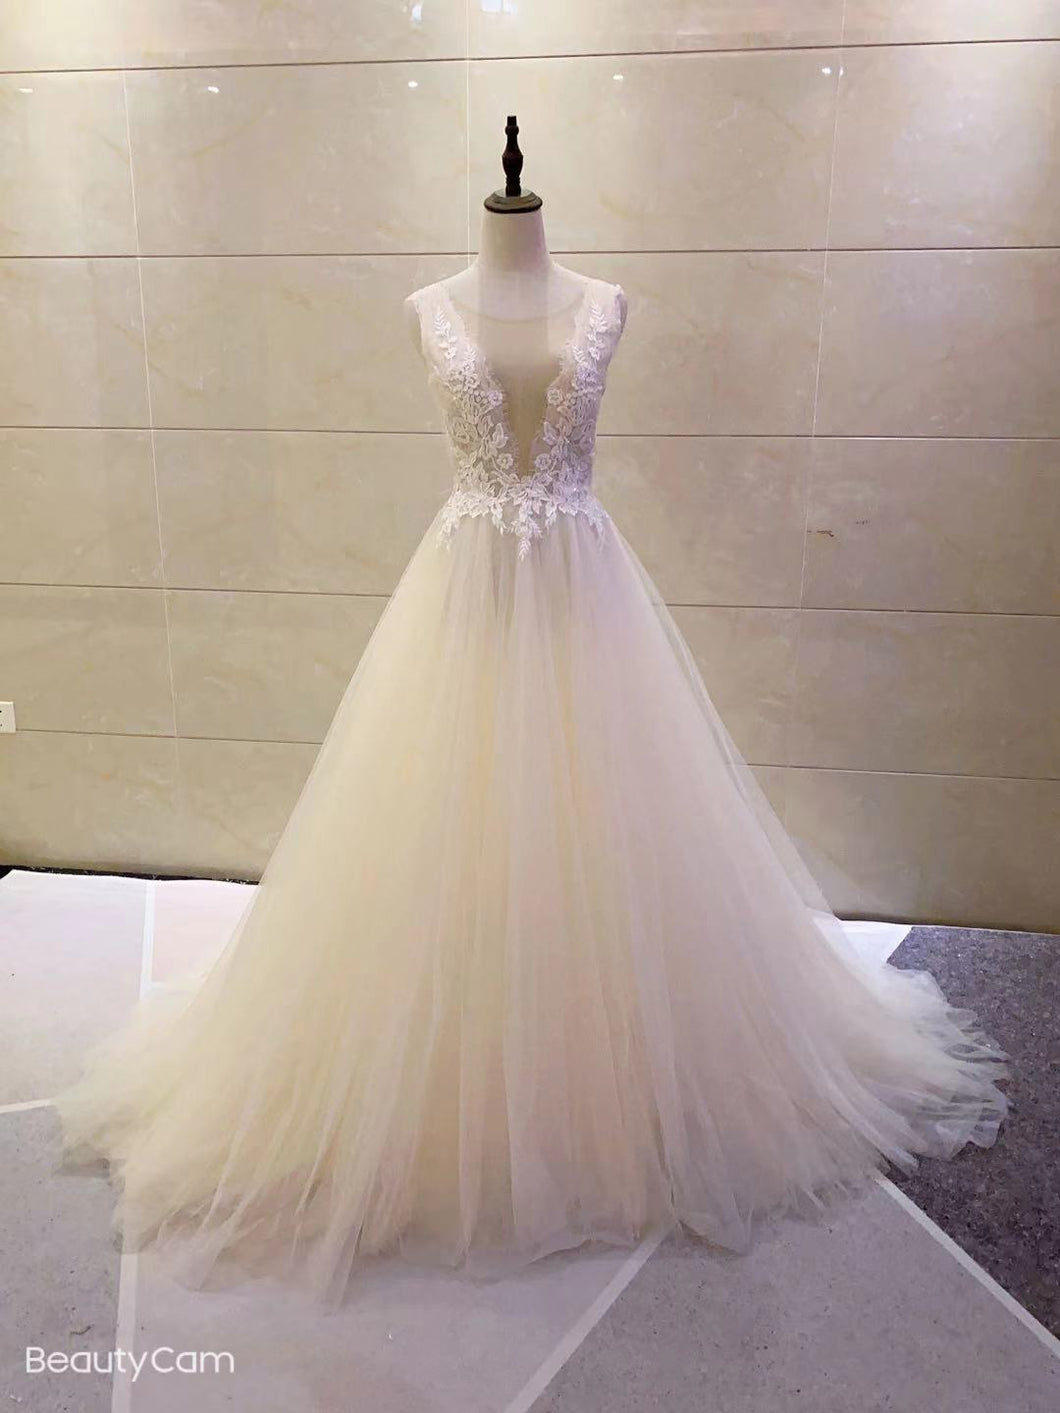 Sleeveless a-line wedding gown